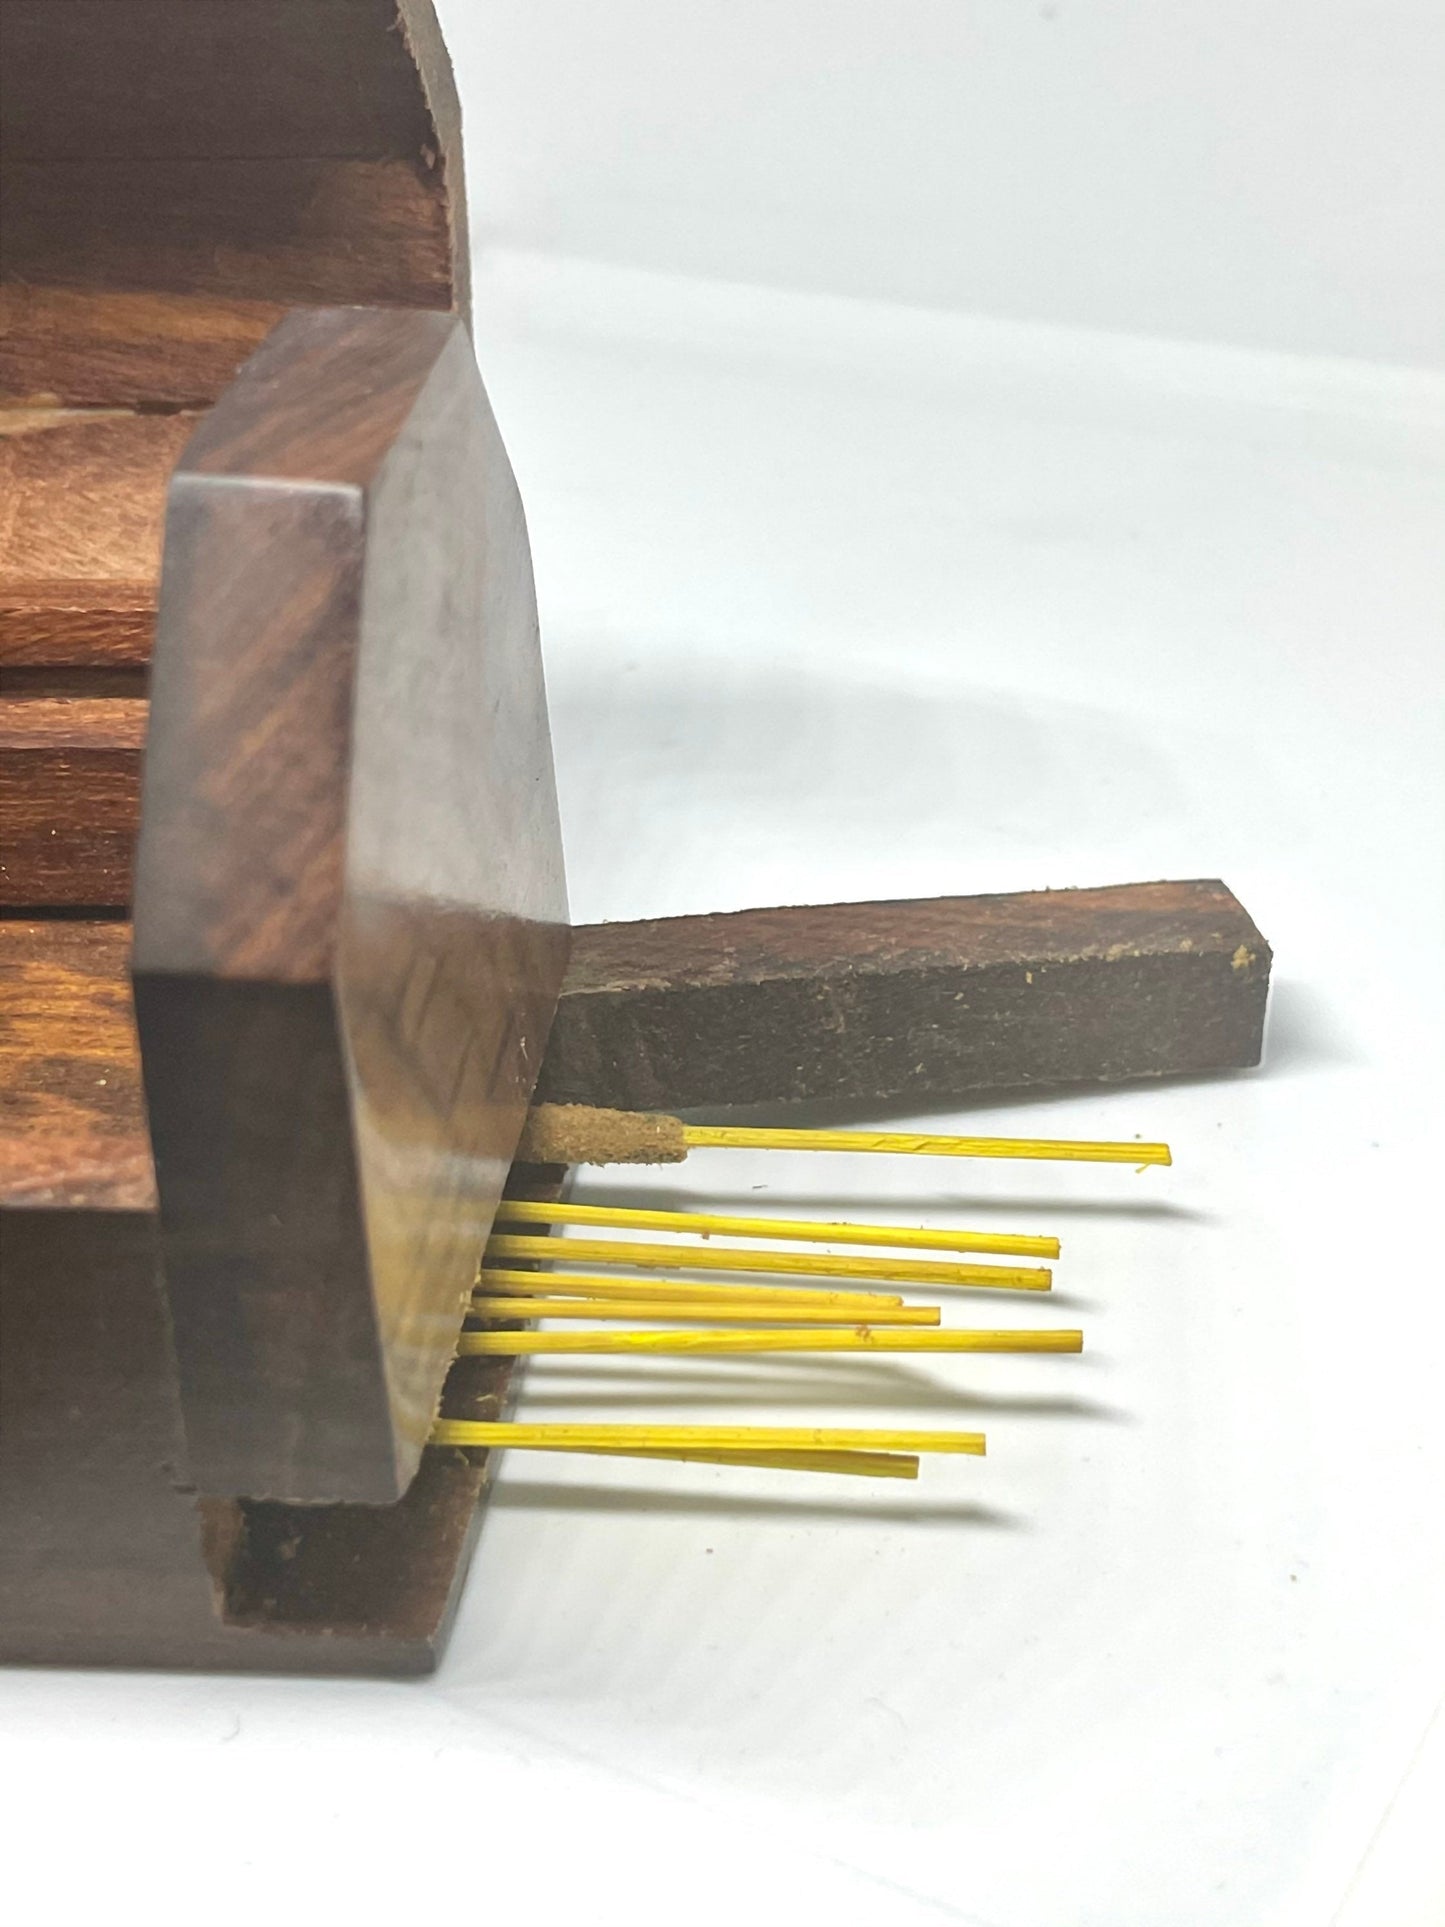 NEW LOVE DEAL 1 40gram box of authentic Nag Champa incense and burner set V2.0